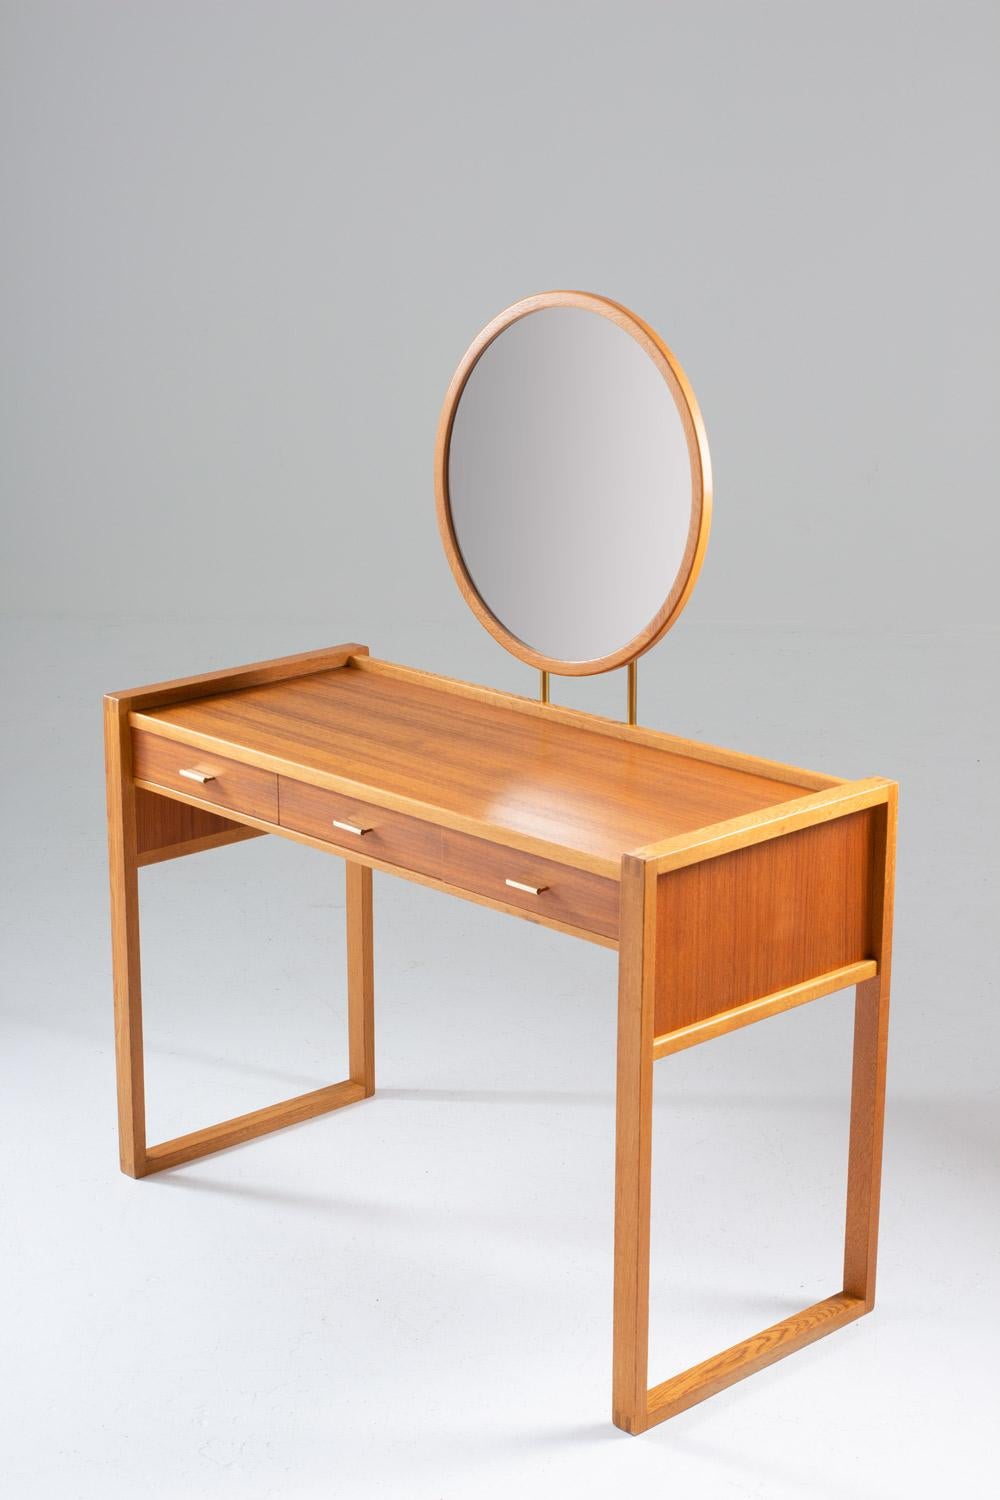 20th Century Swedish Vanity Table in Teak, Oak, and Brass by AB Nybrofabriken